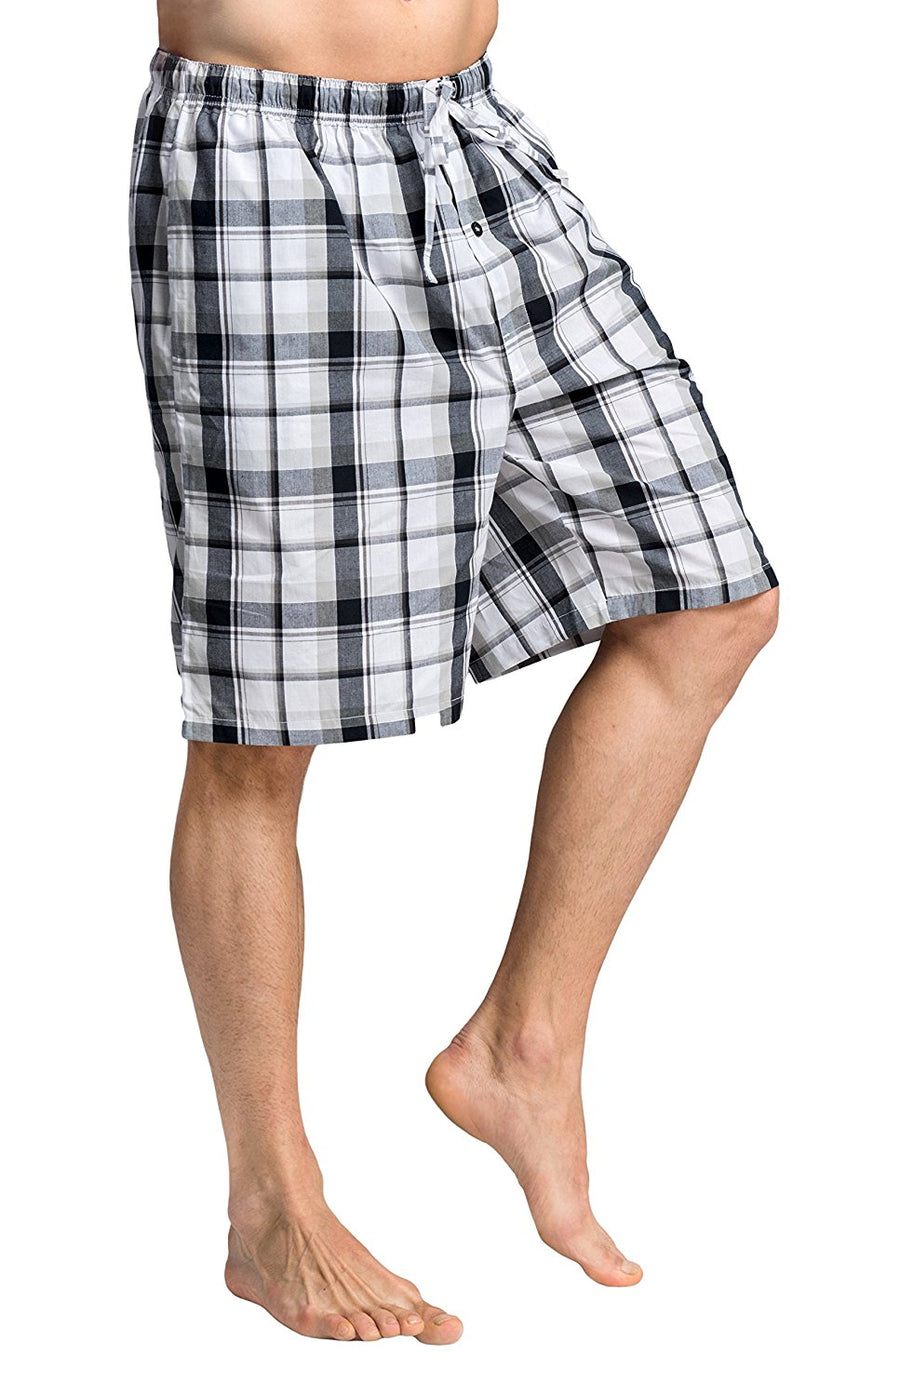 CYZ Men's 100% Cotton Plaid Woven Pajama Shorts Lounge Shorts